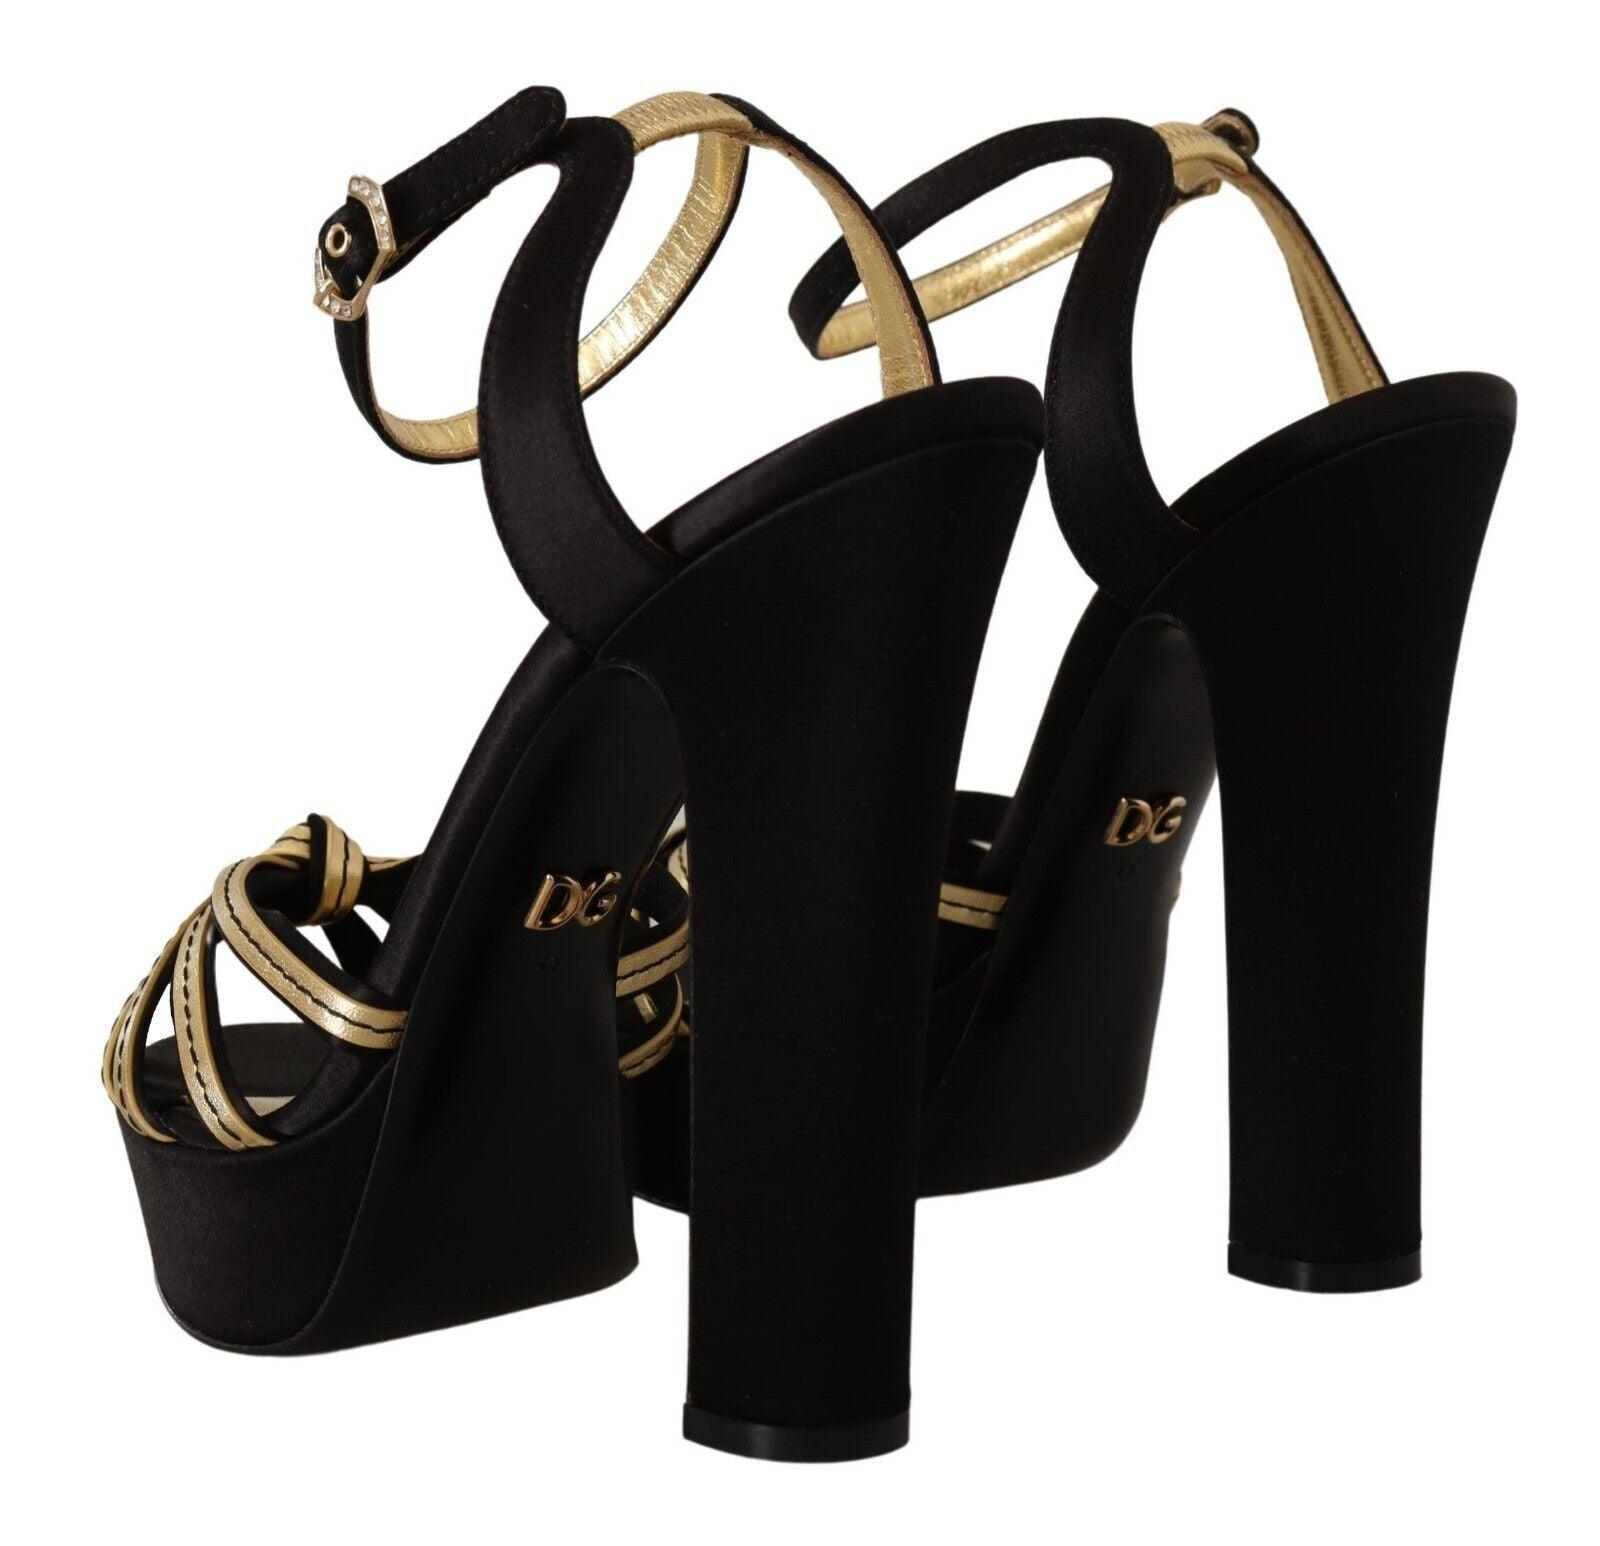 Eva Heels-Black | Heels, Gold and black heels, Wedding heels black